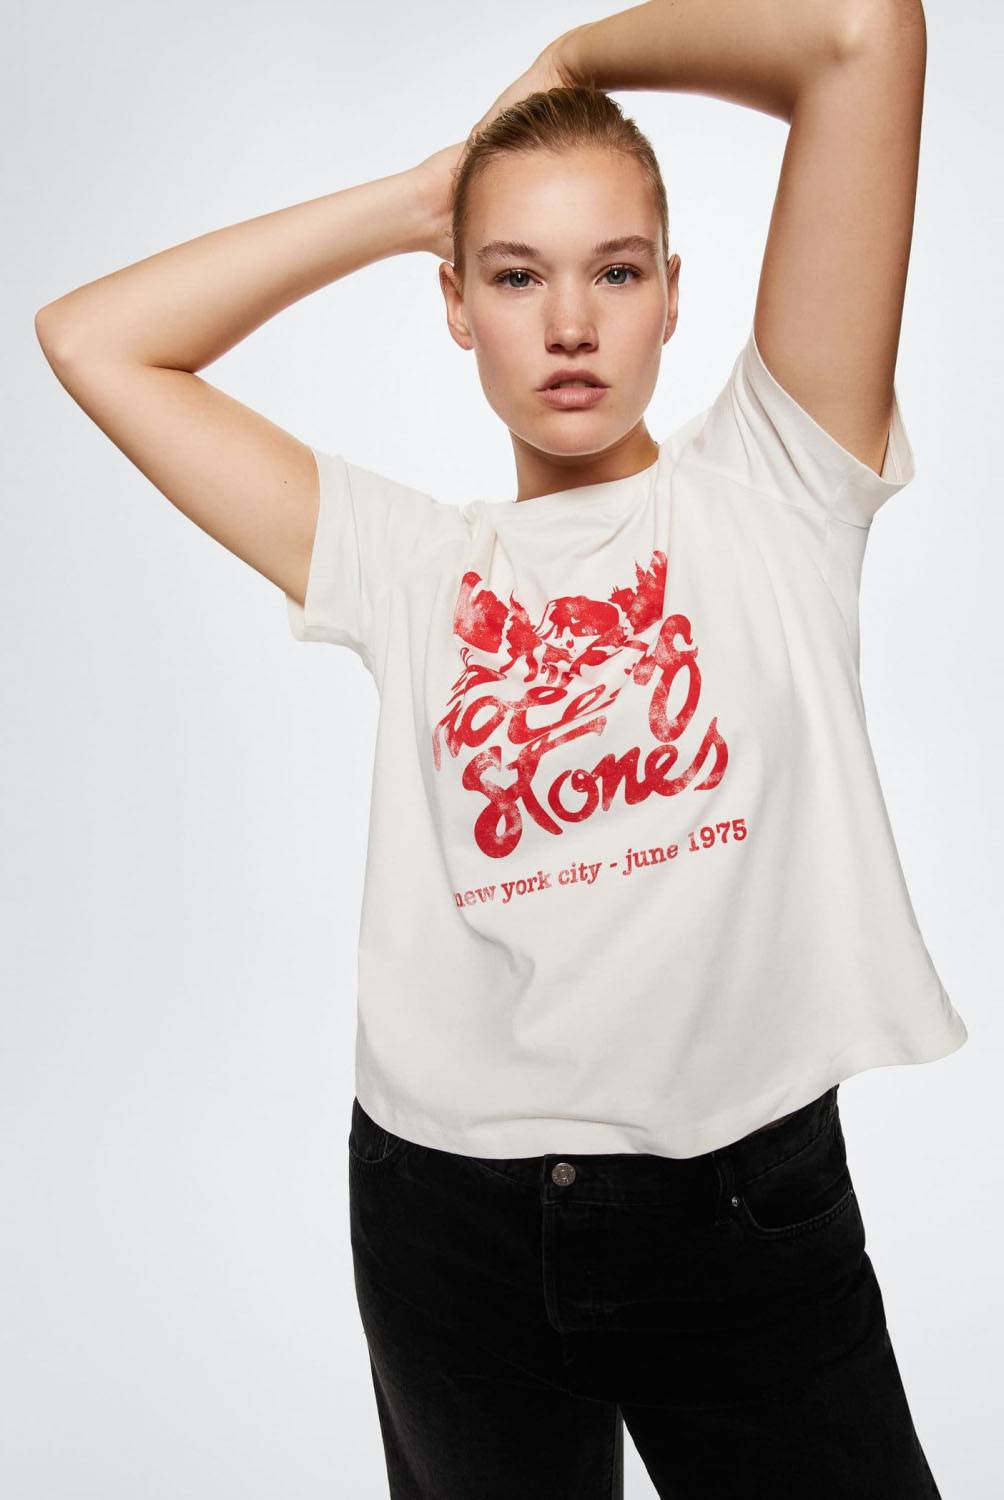 MANGO/Mango Camiseta Rolling Stones Mujer Tienda